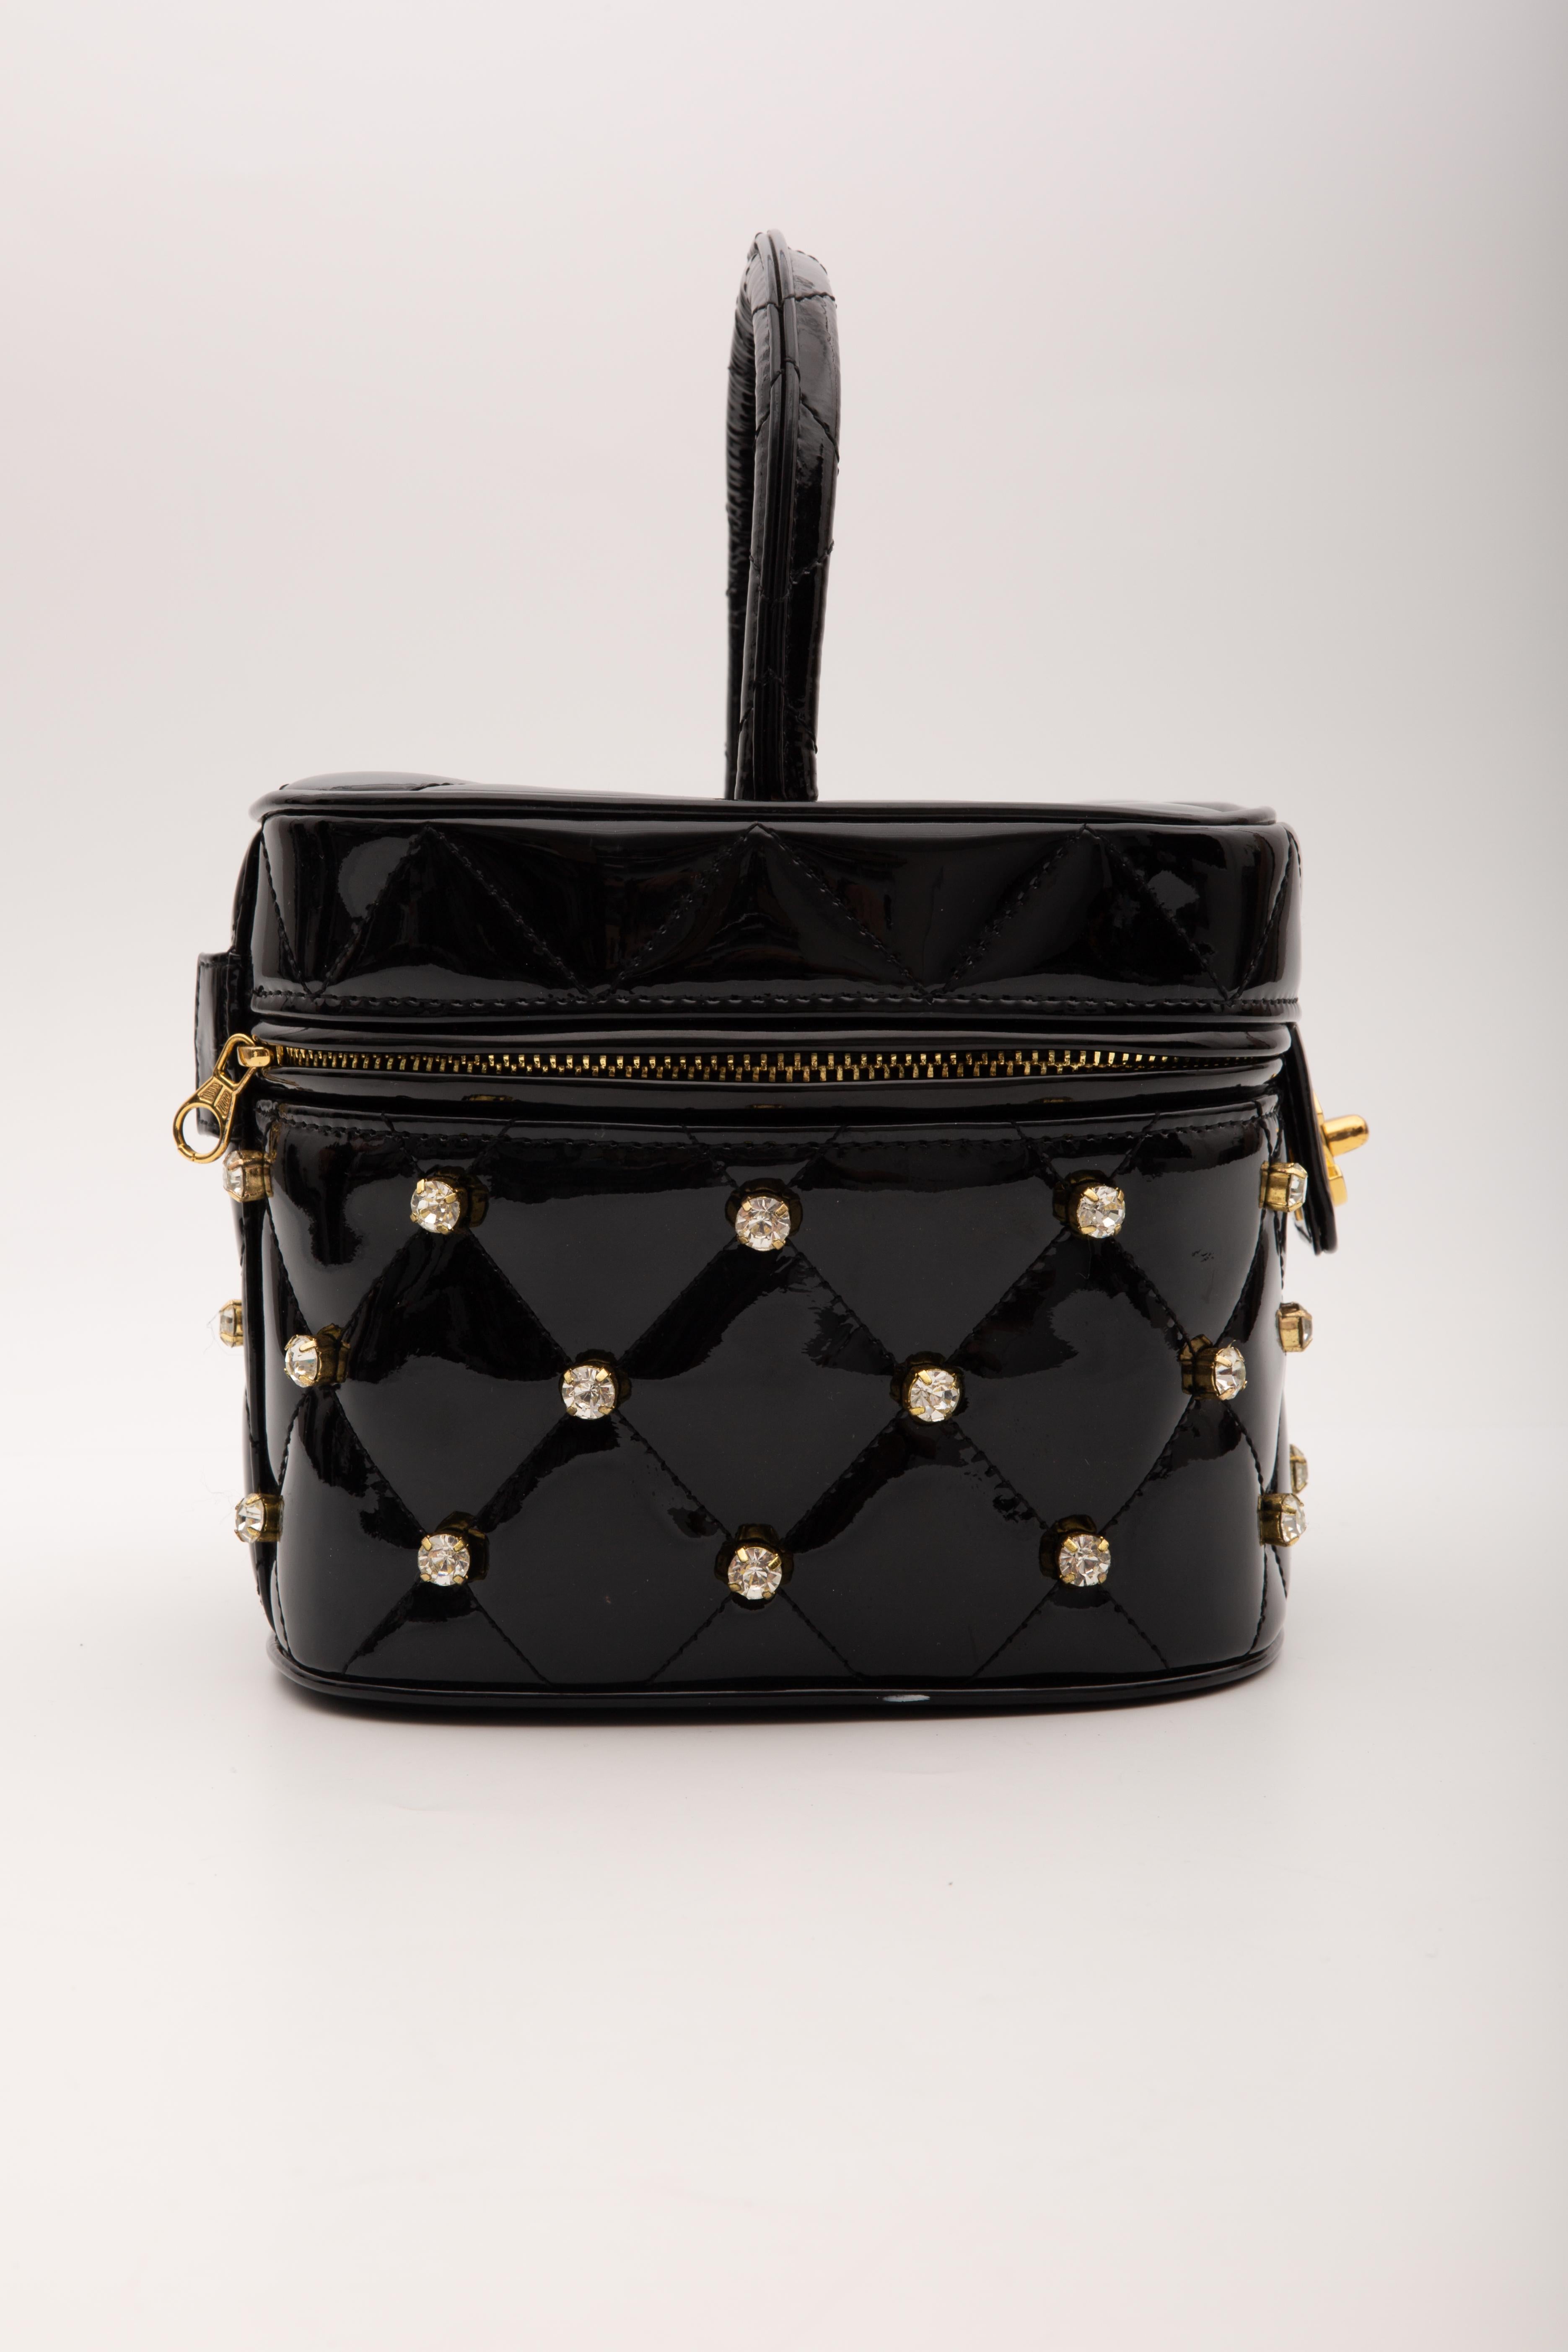 Black Chanel Vintage Patent Leather Quilted Crystal CC Vanity Handbag (Circa 1991)